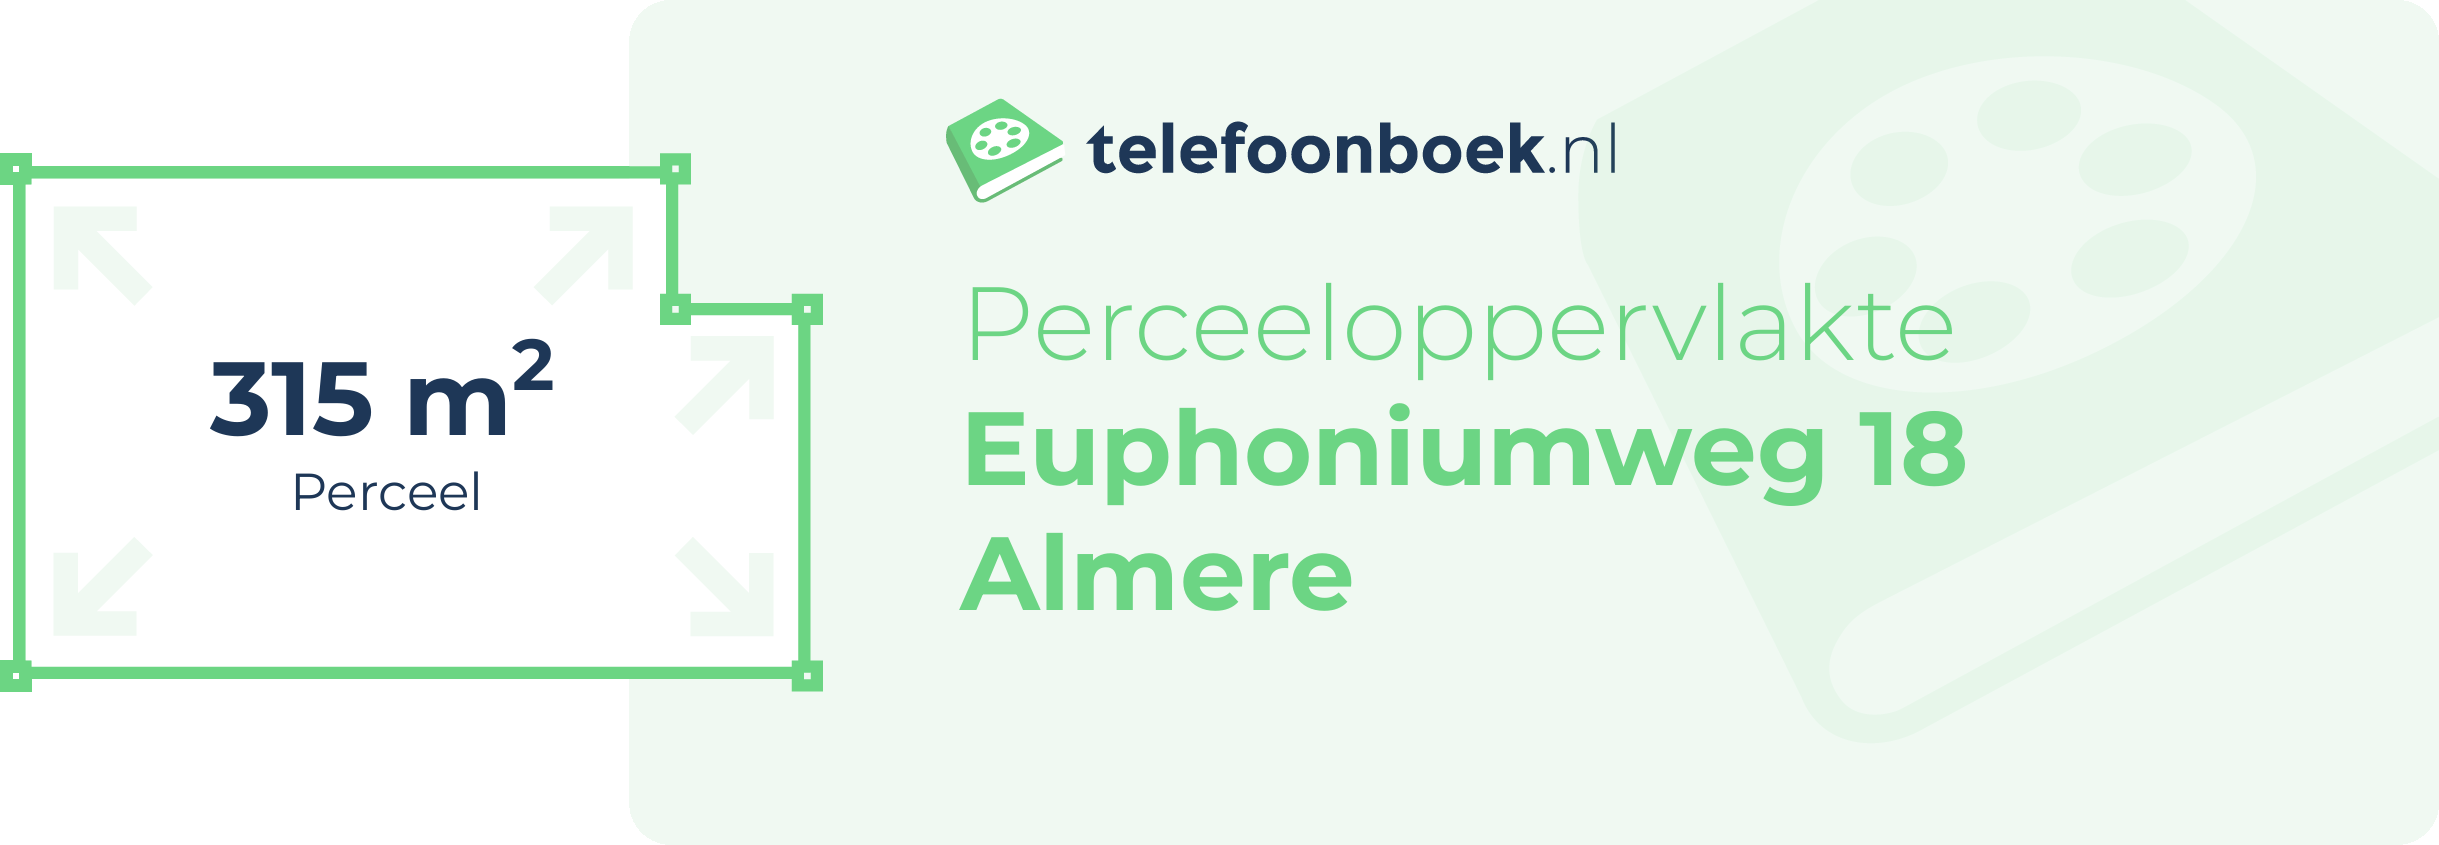 Perceeloppervlakte Euphoniumweg 18 Almere